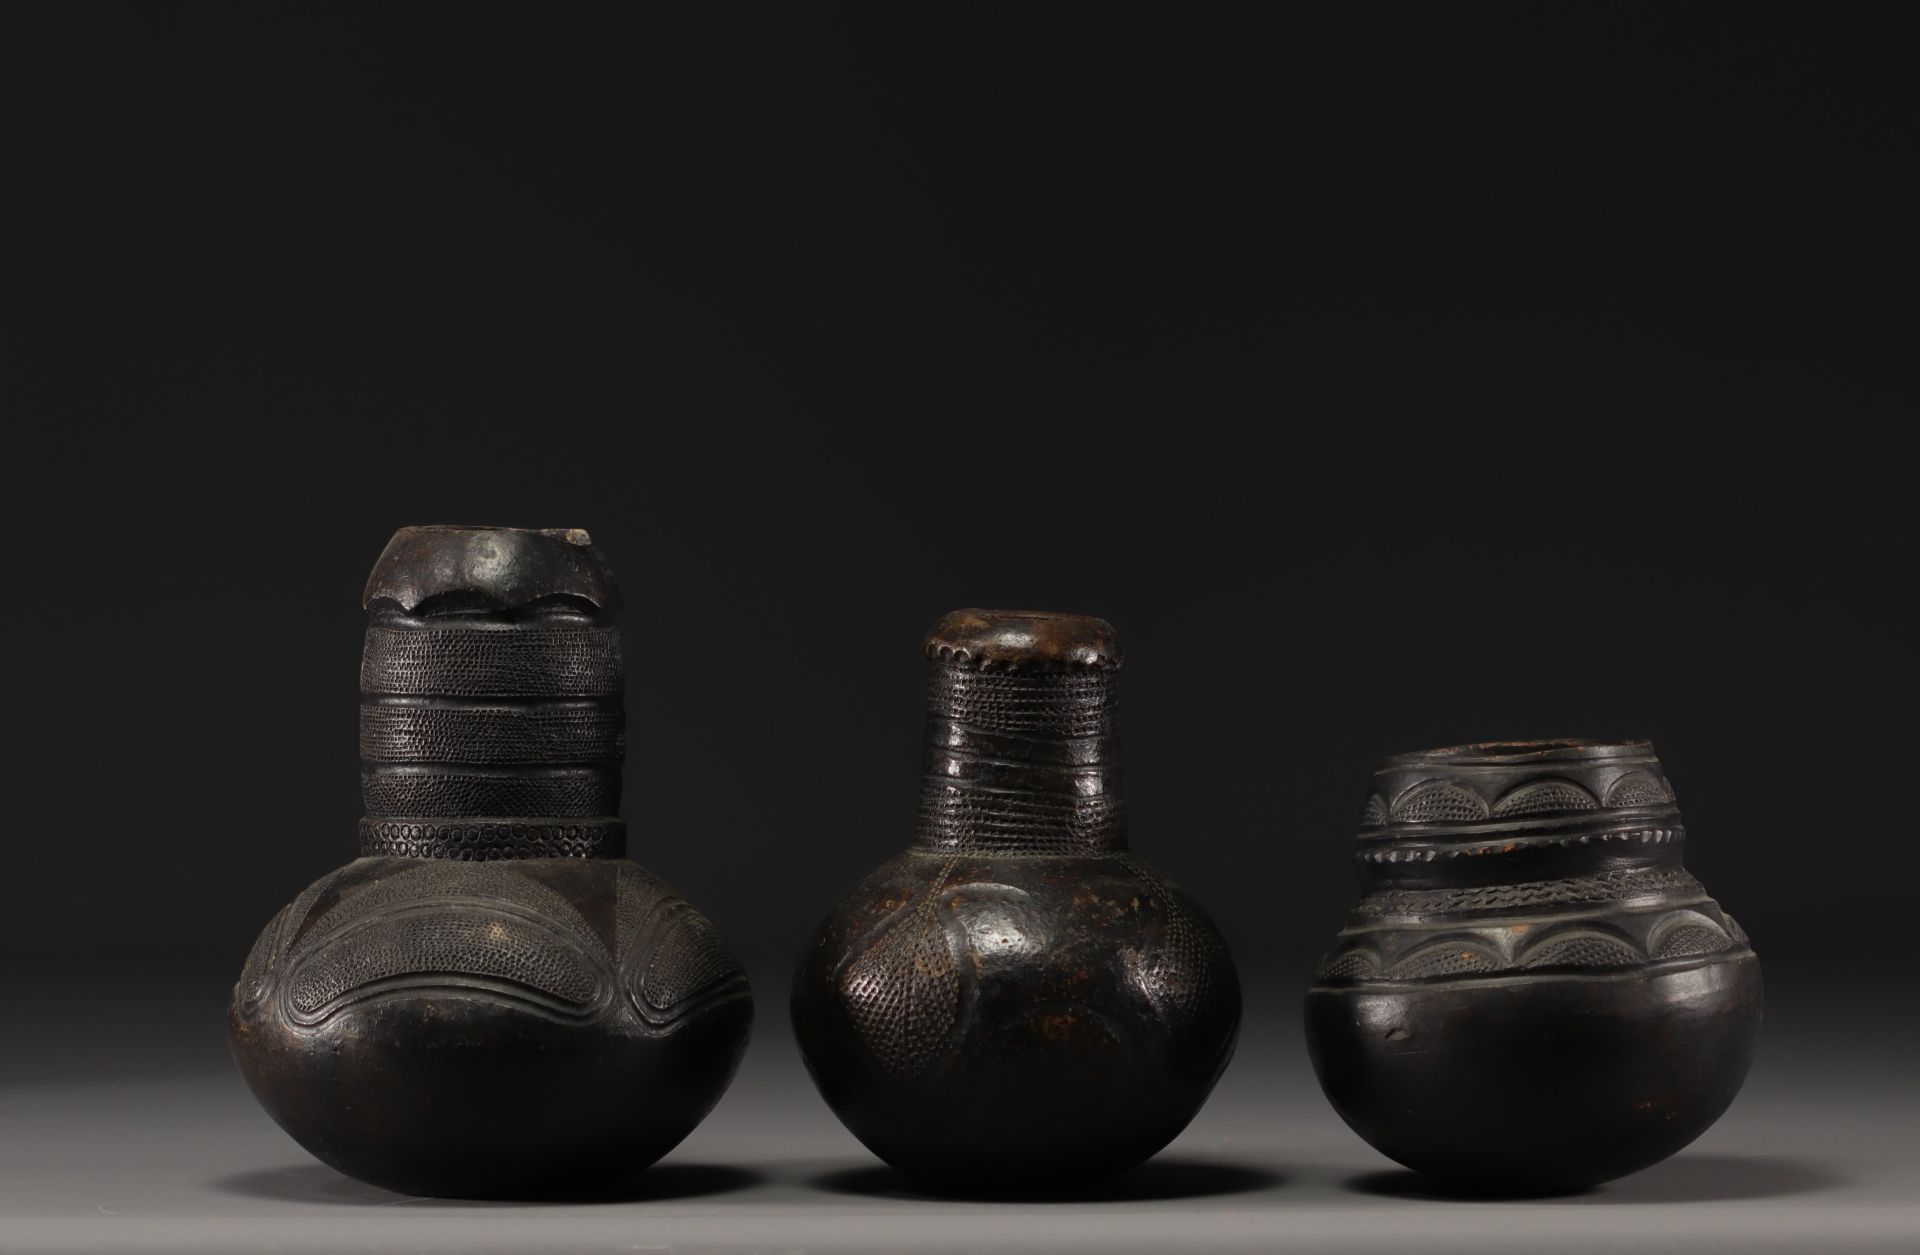 Set of 3 Mangbetu terracotta receptacles - Rep.Dem.Congo